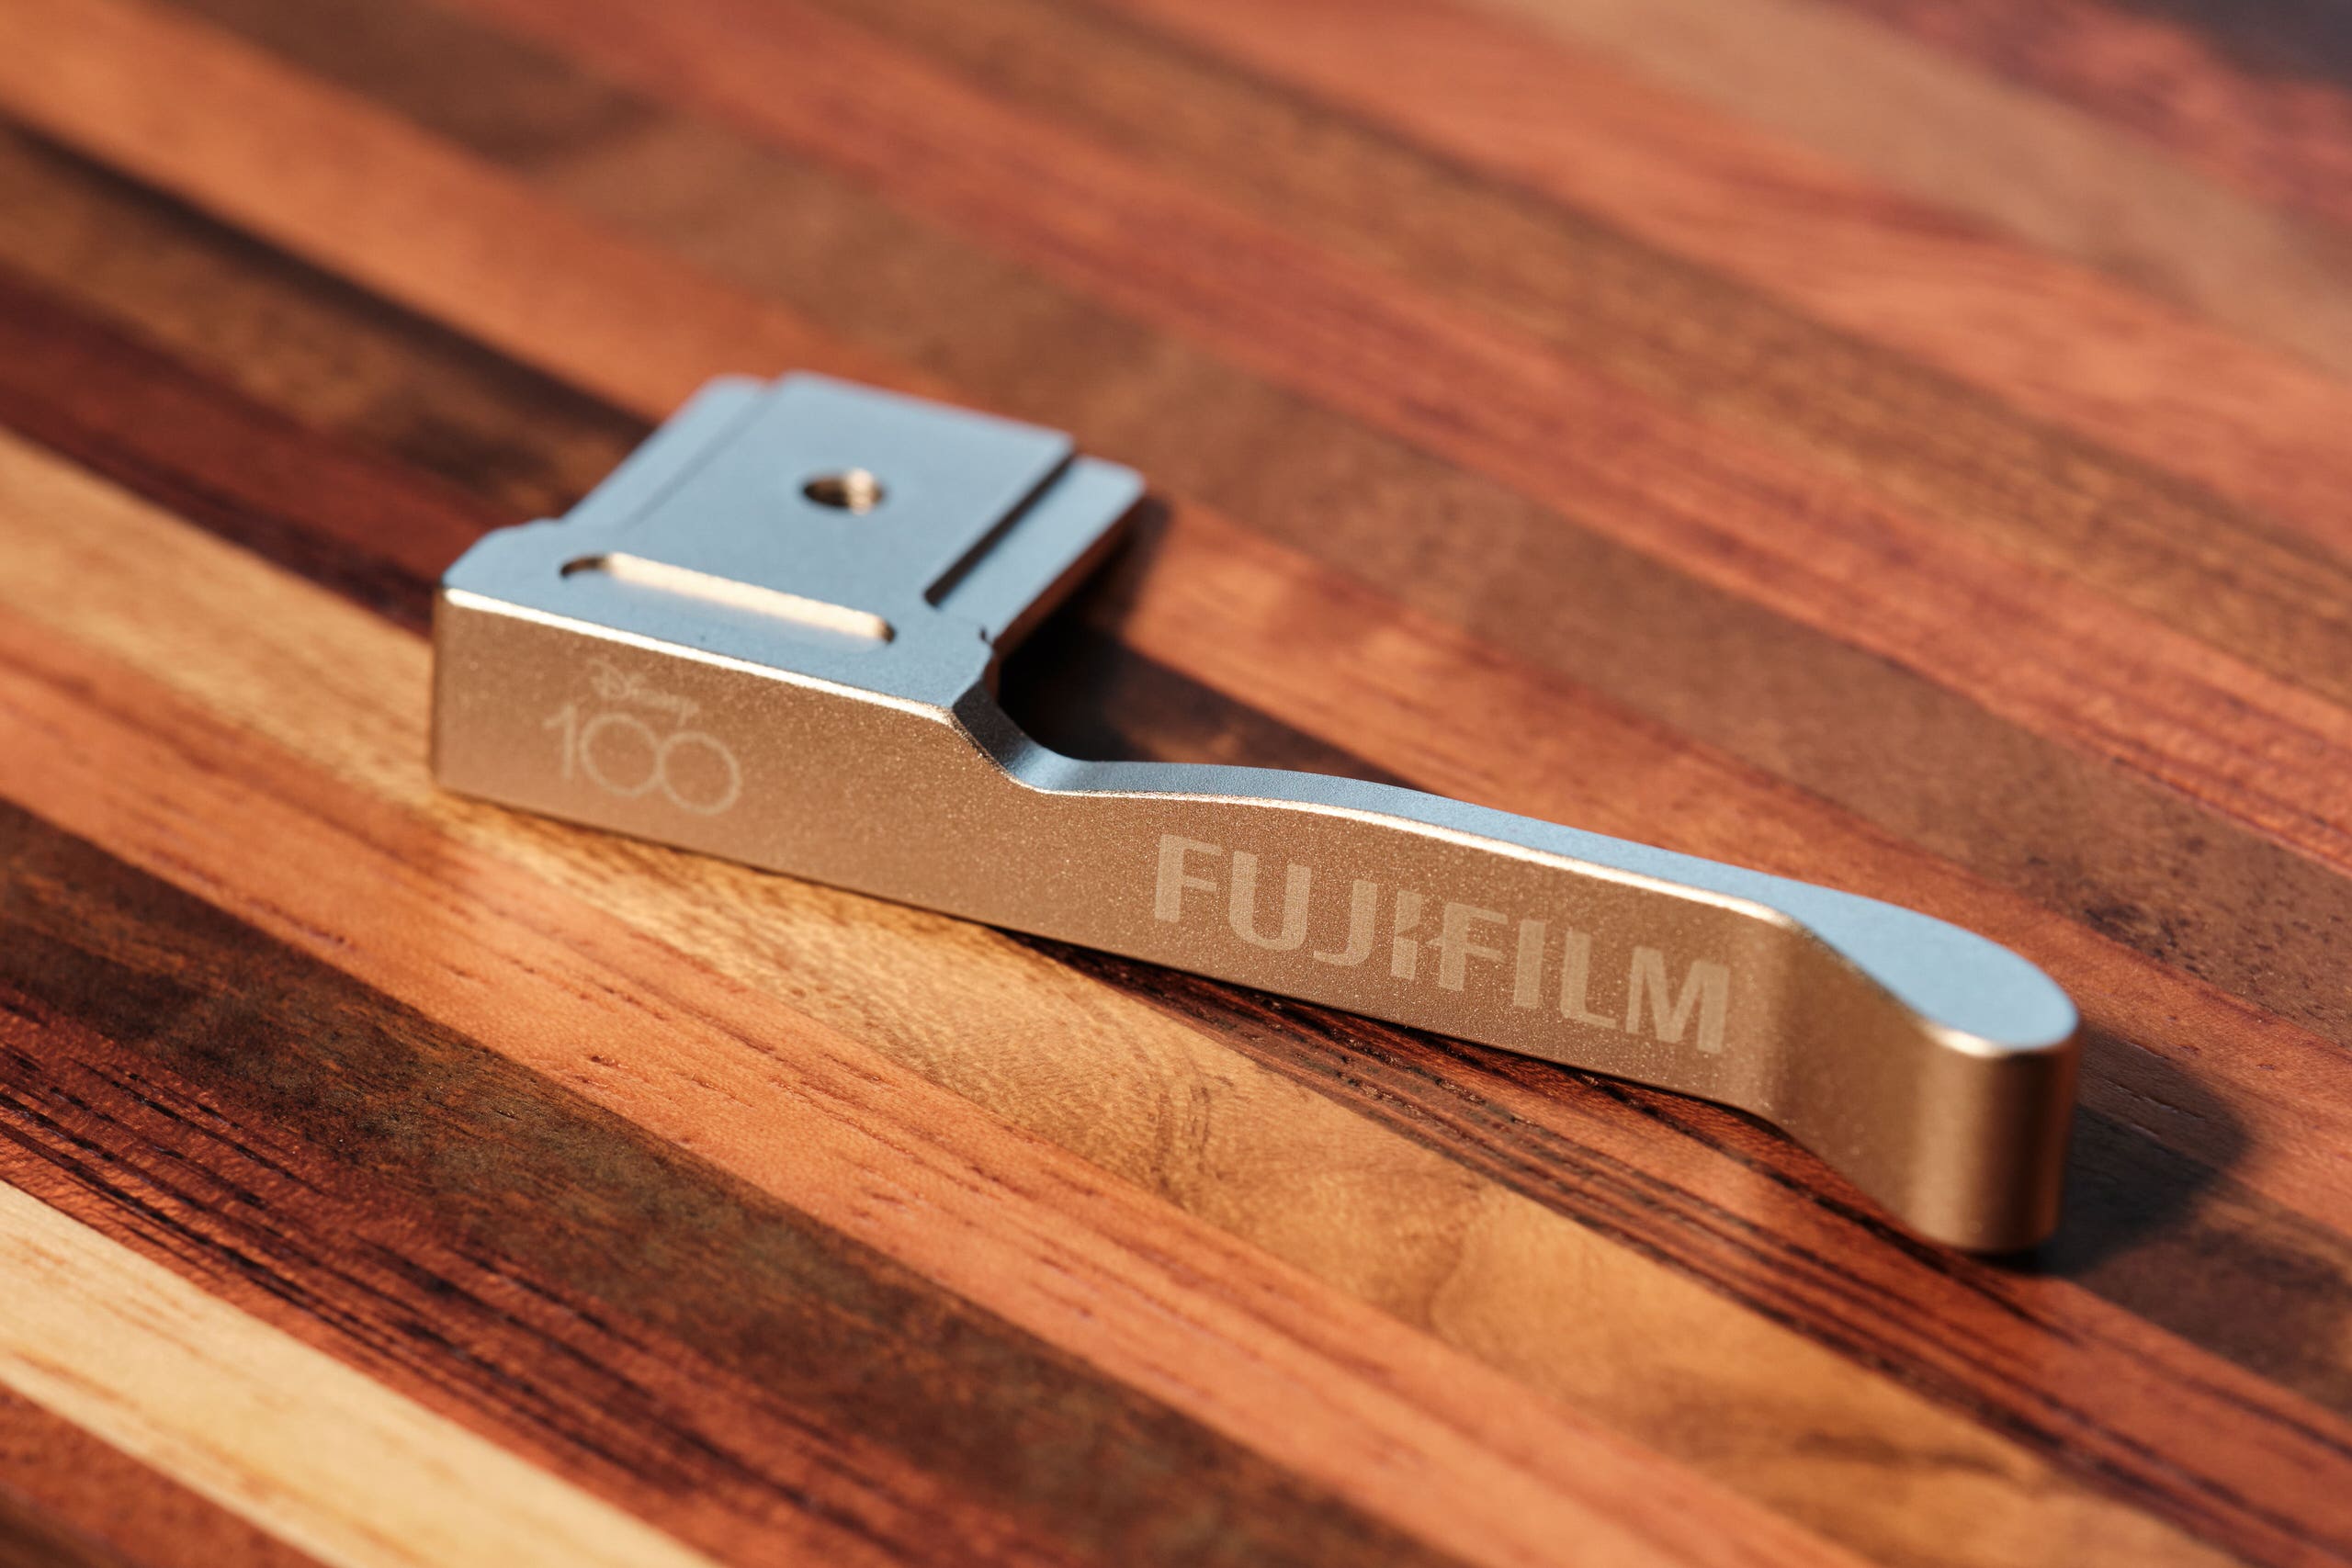 Fujifilm X100V Limited Disney Edition Launched - Fuji Rumors